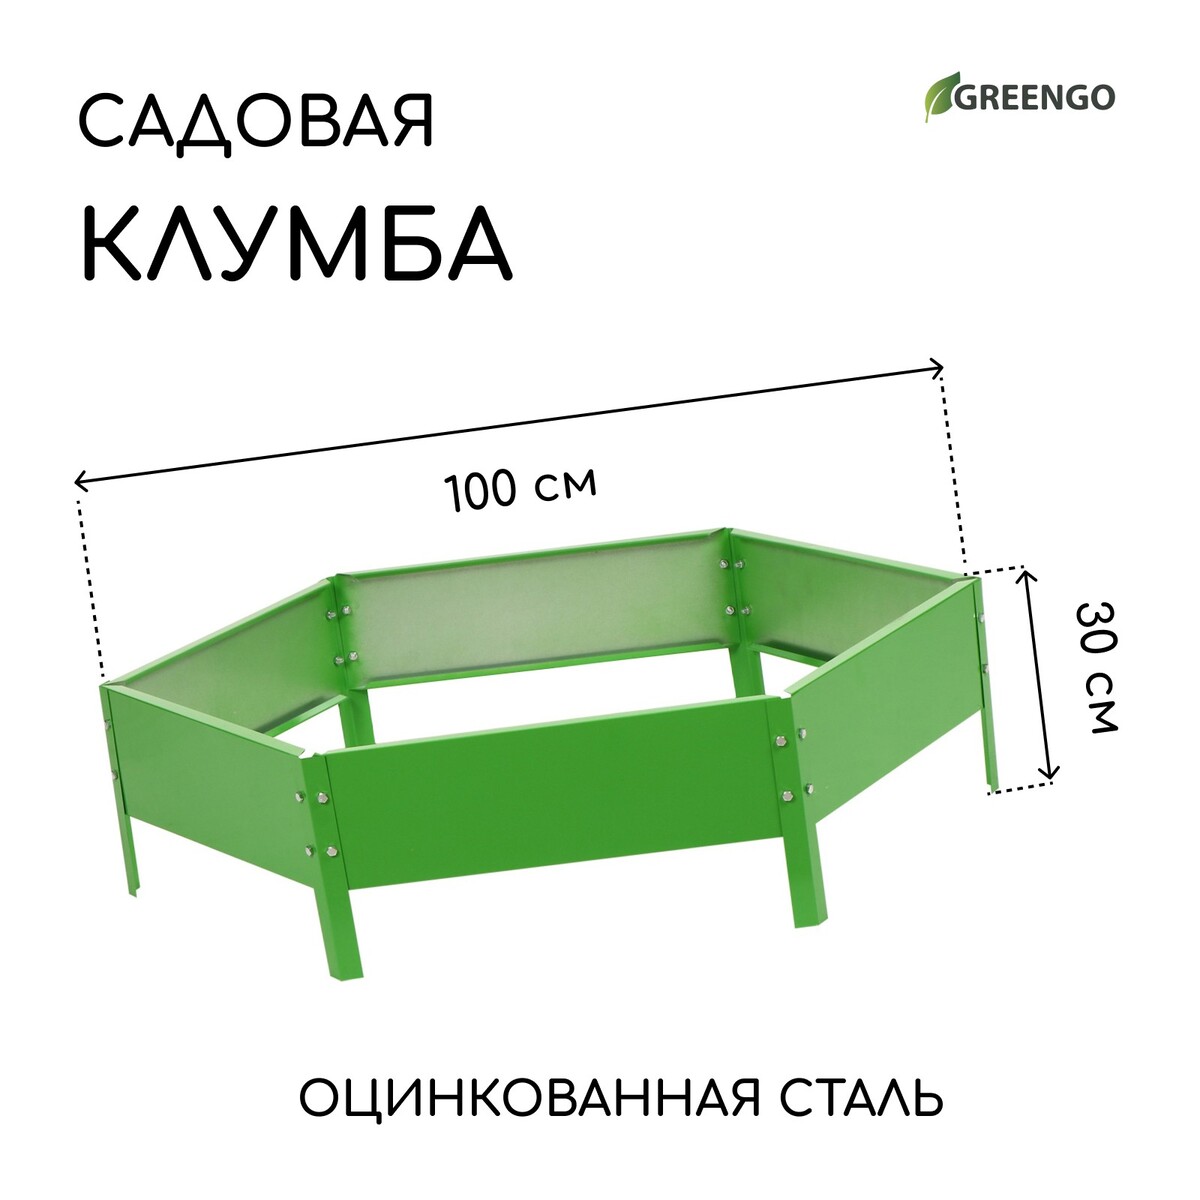 Клумба оцинкованная, d = 100 см, h = 15 см, ярко-зеленая, greengo краска ма 15 царицынские краски ярко зеленая 0 9кг